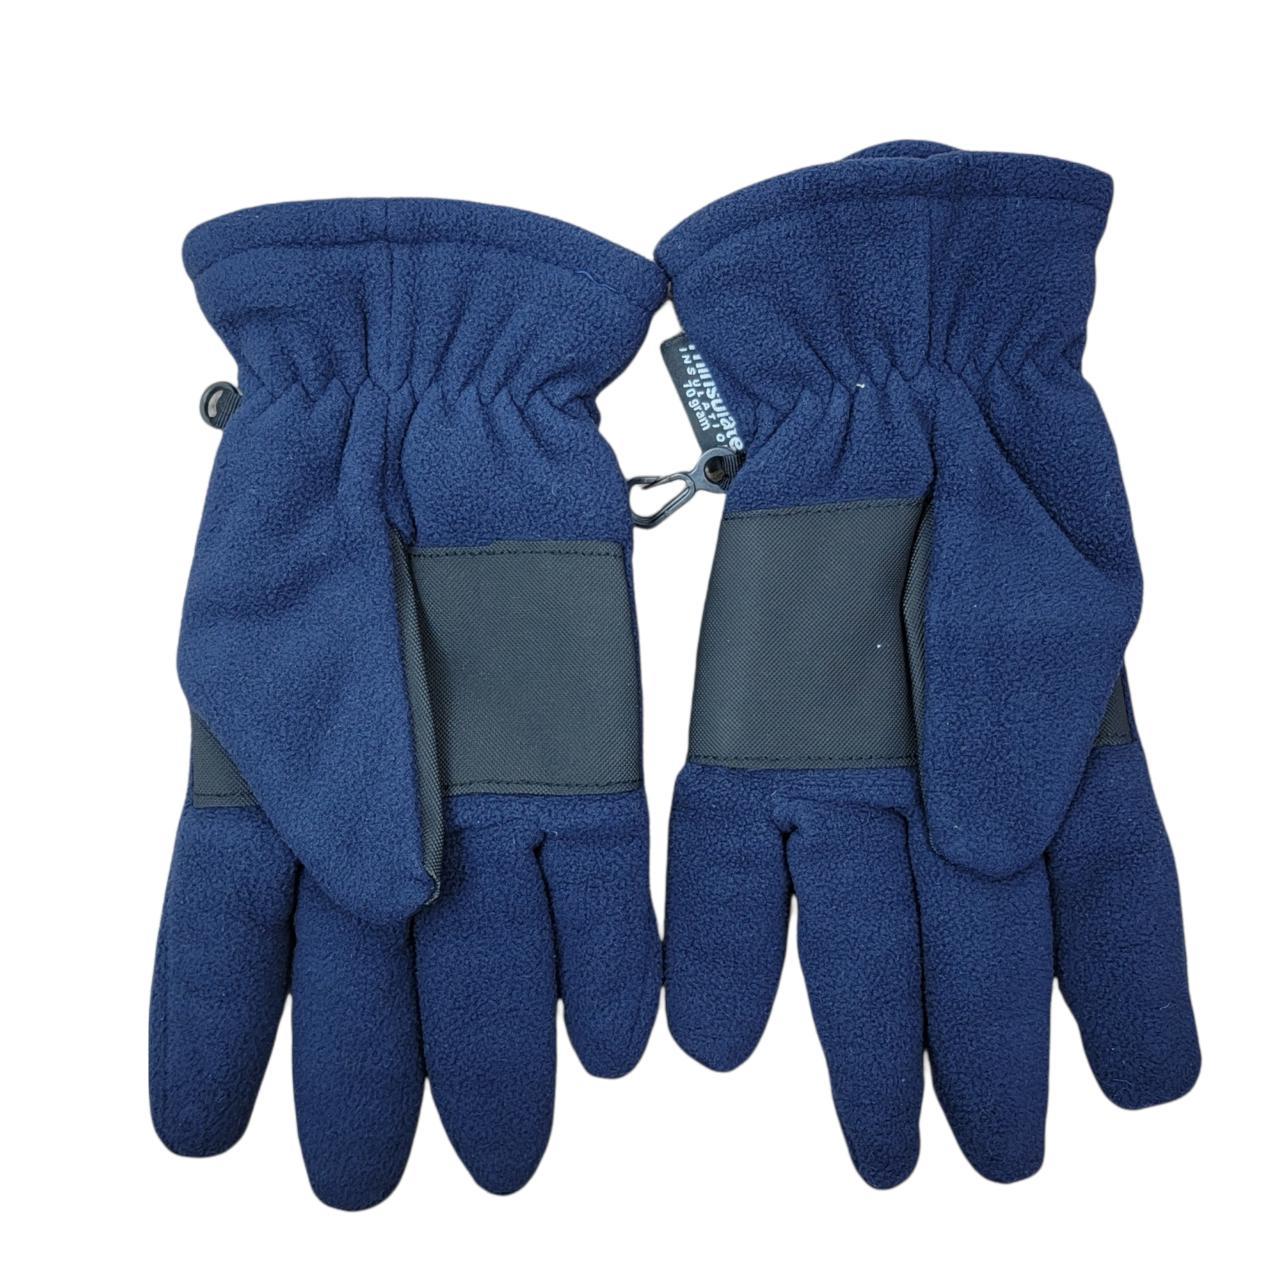 Product Image 2 - Blue Fleece Gloves Unisex Adult